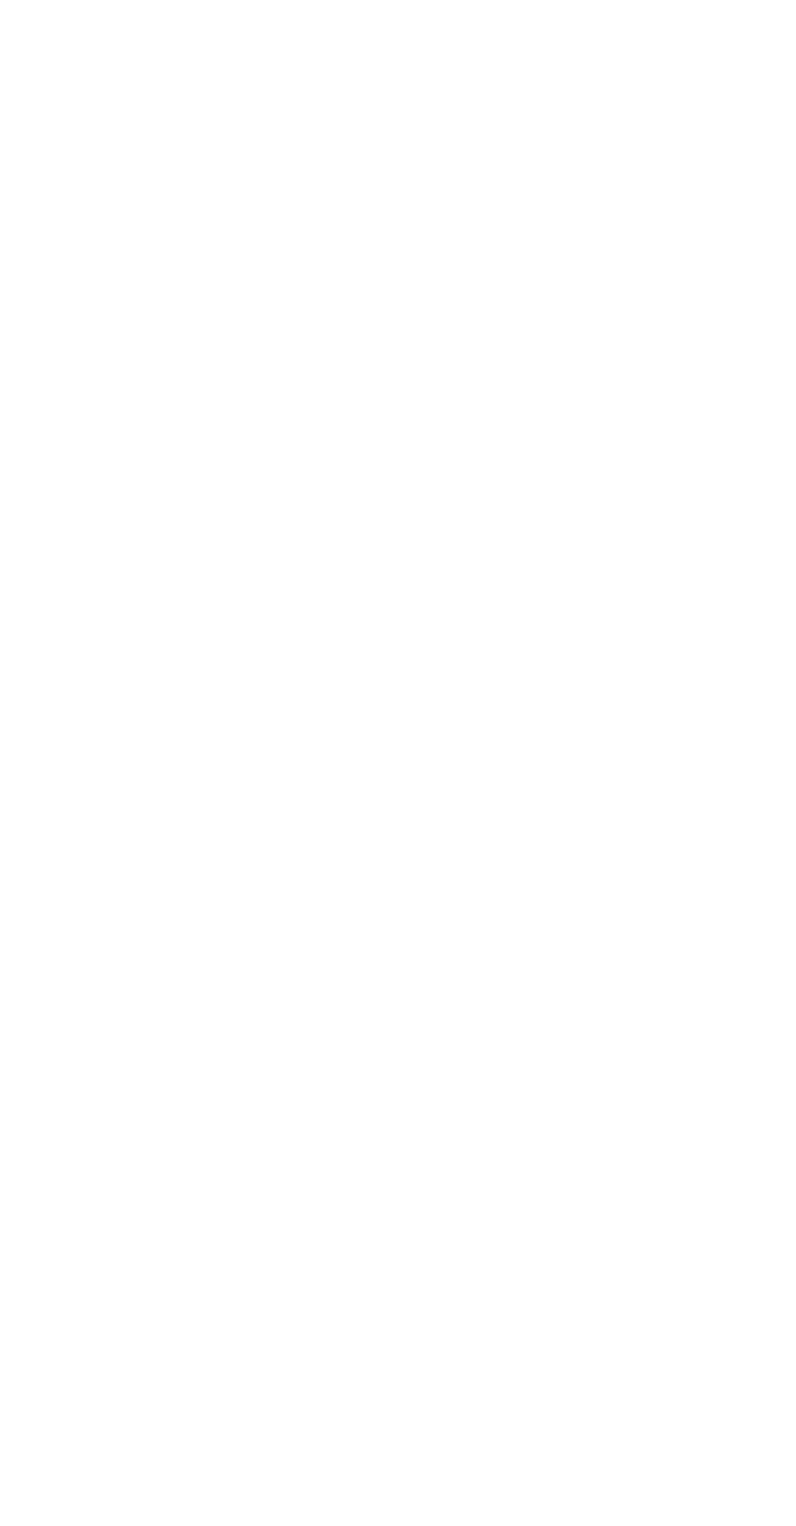 Stereotaxis logo pour fonds sombres (PNG transparent)